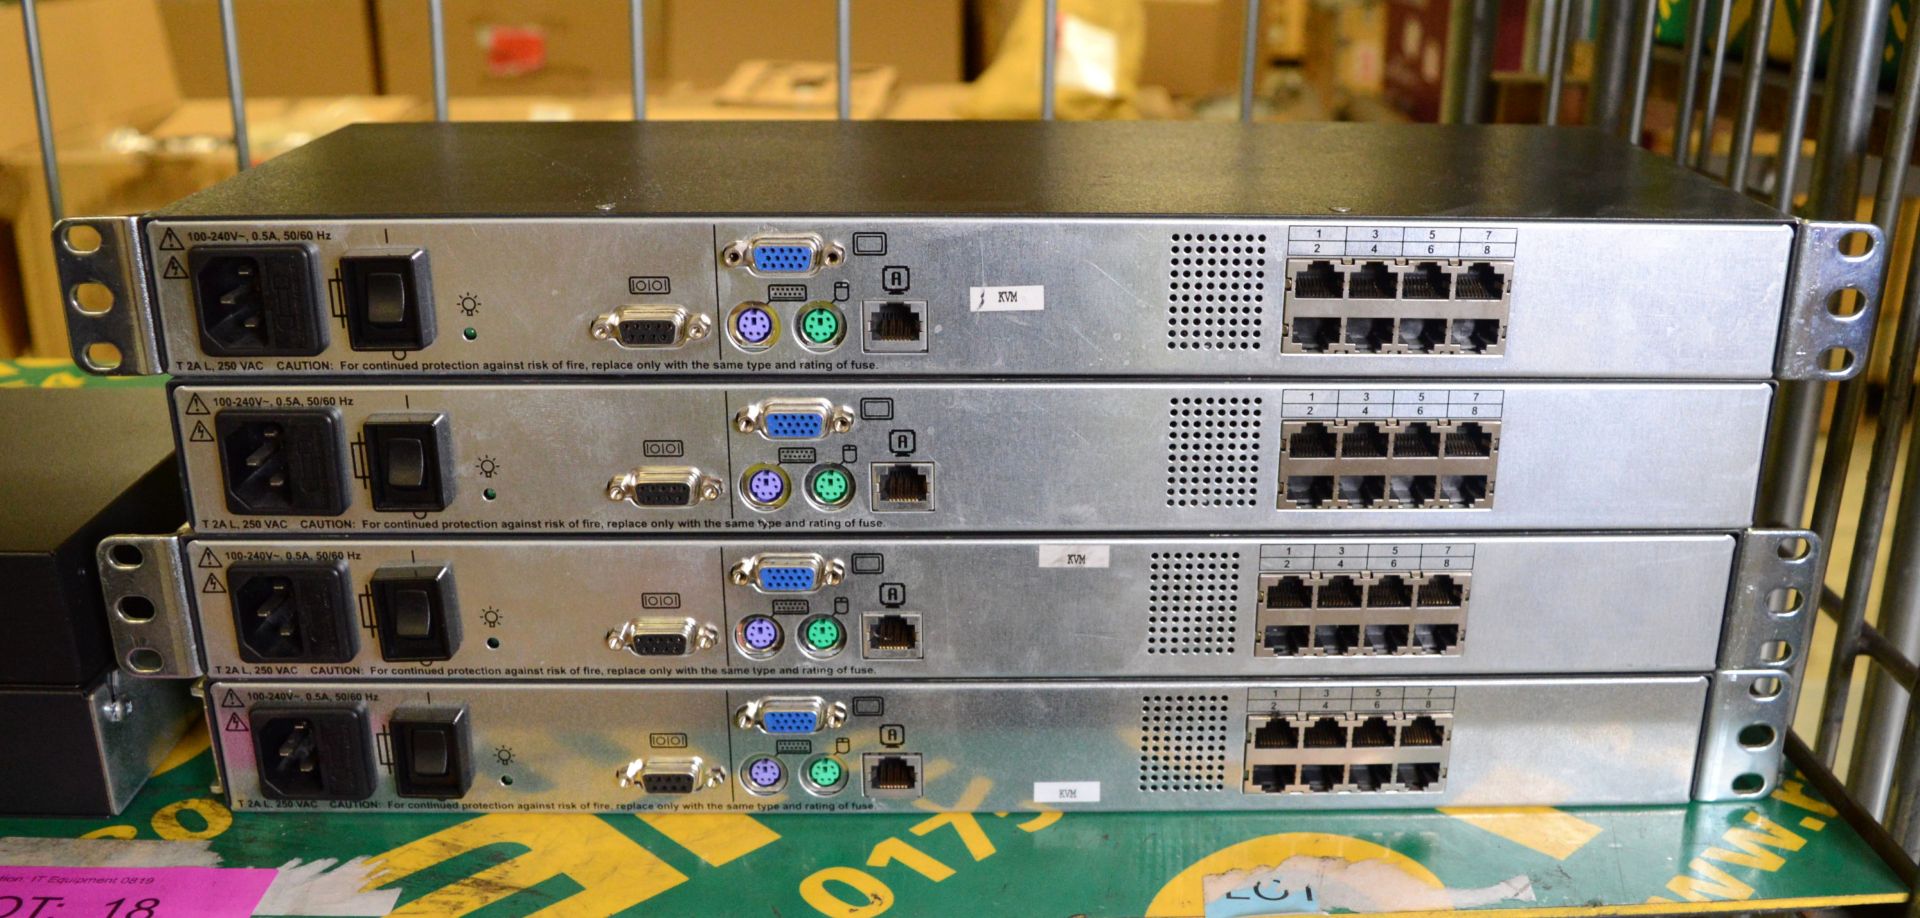 2x HP Modular PDU Control Units, 4x HP KVM Switcher panels - Image 3 of 3